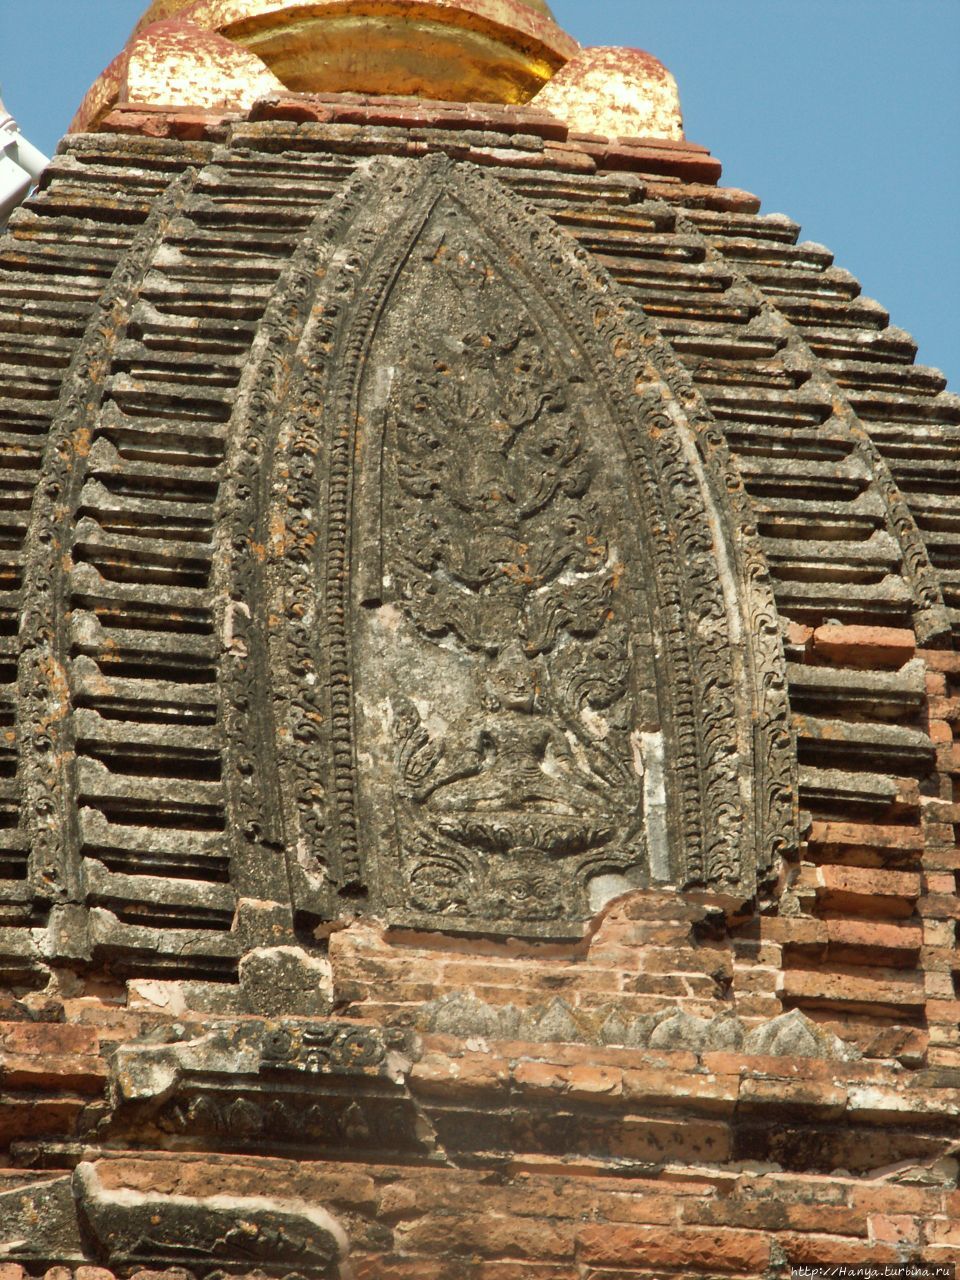 Пагода Dhamma Ya Zi Ka